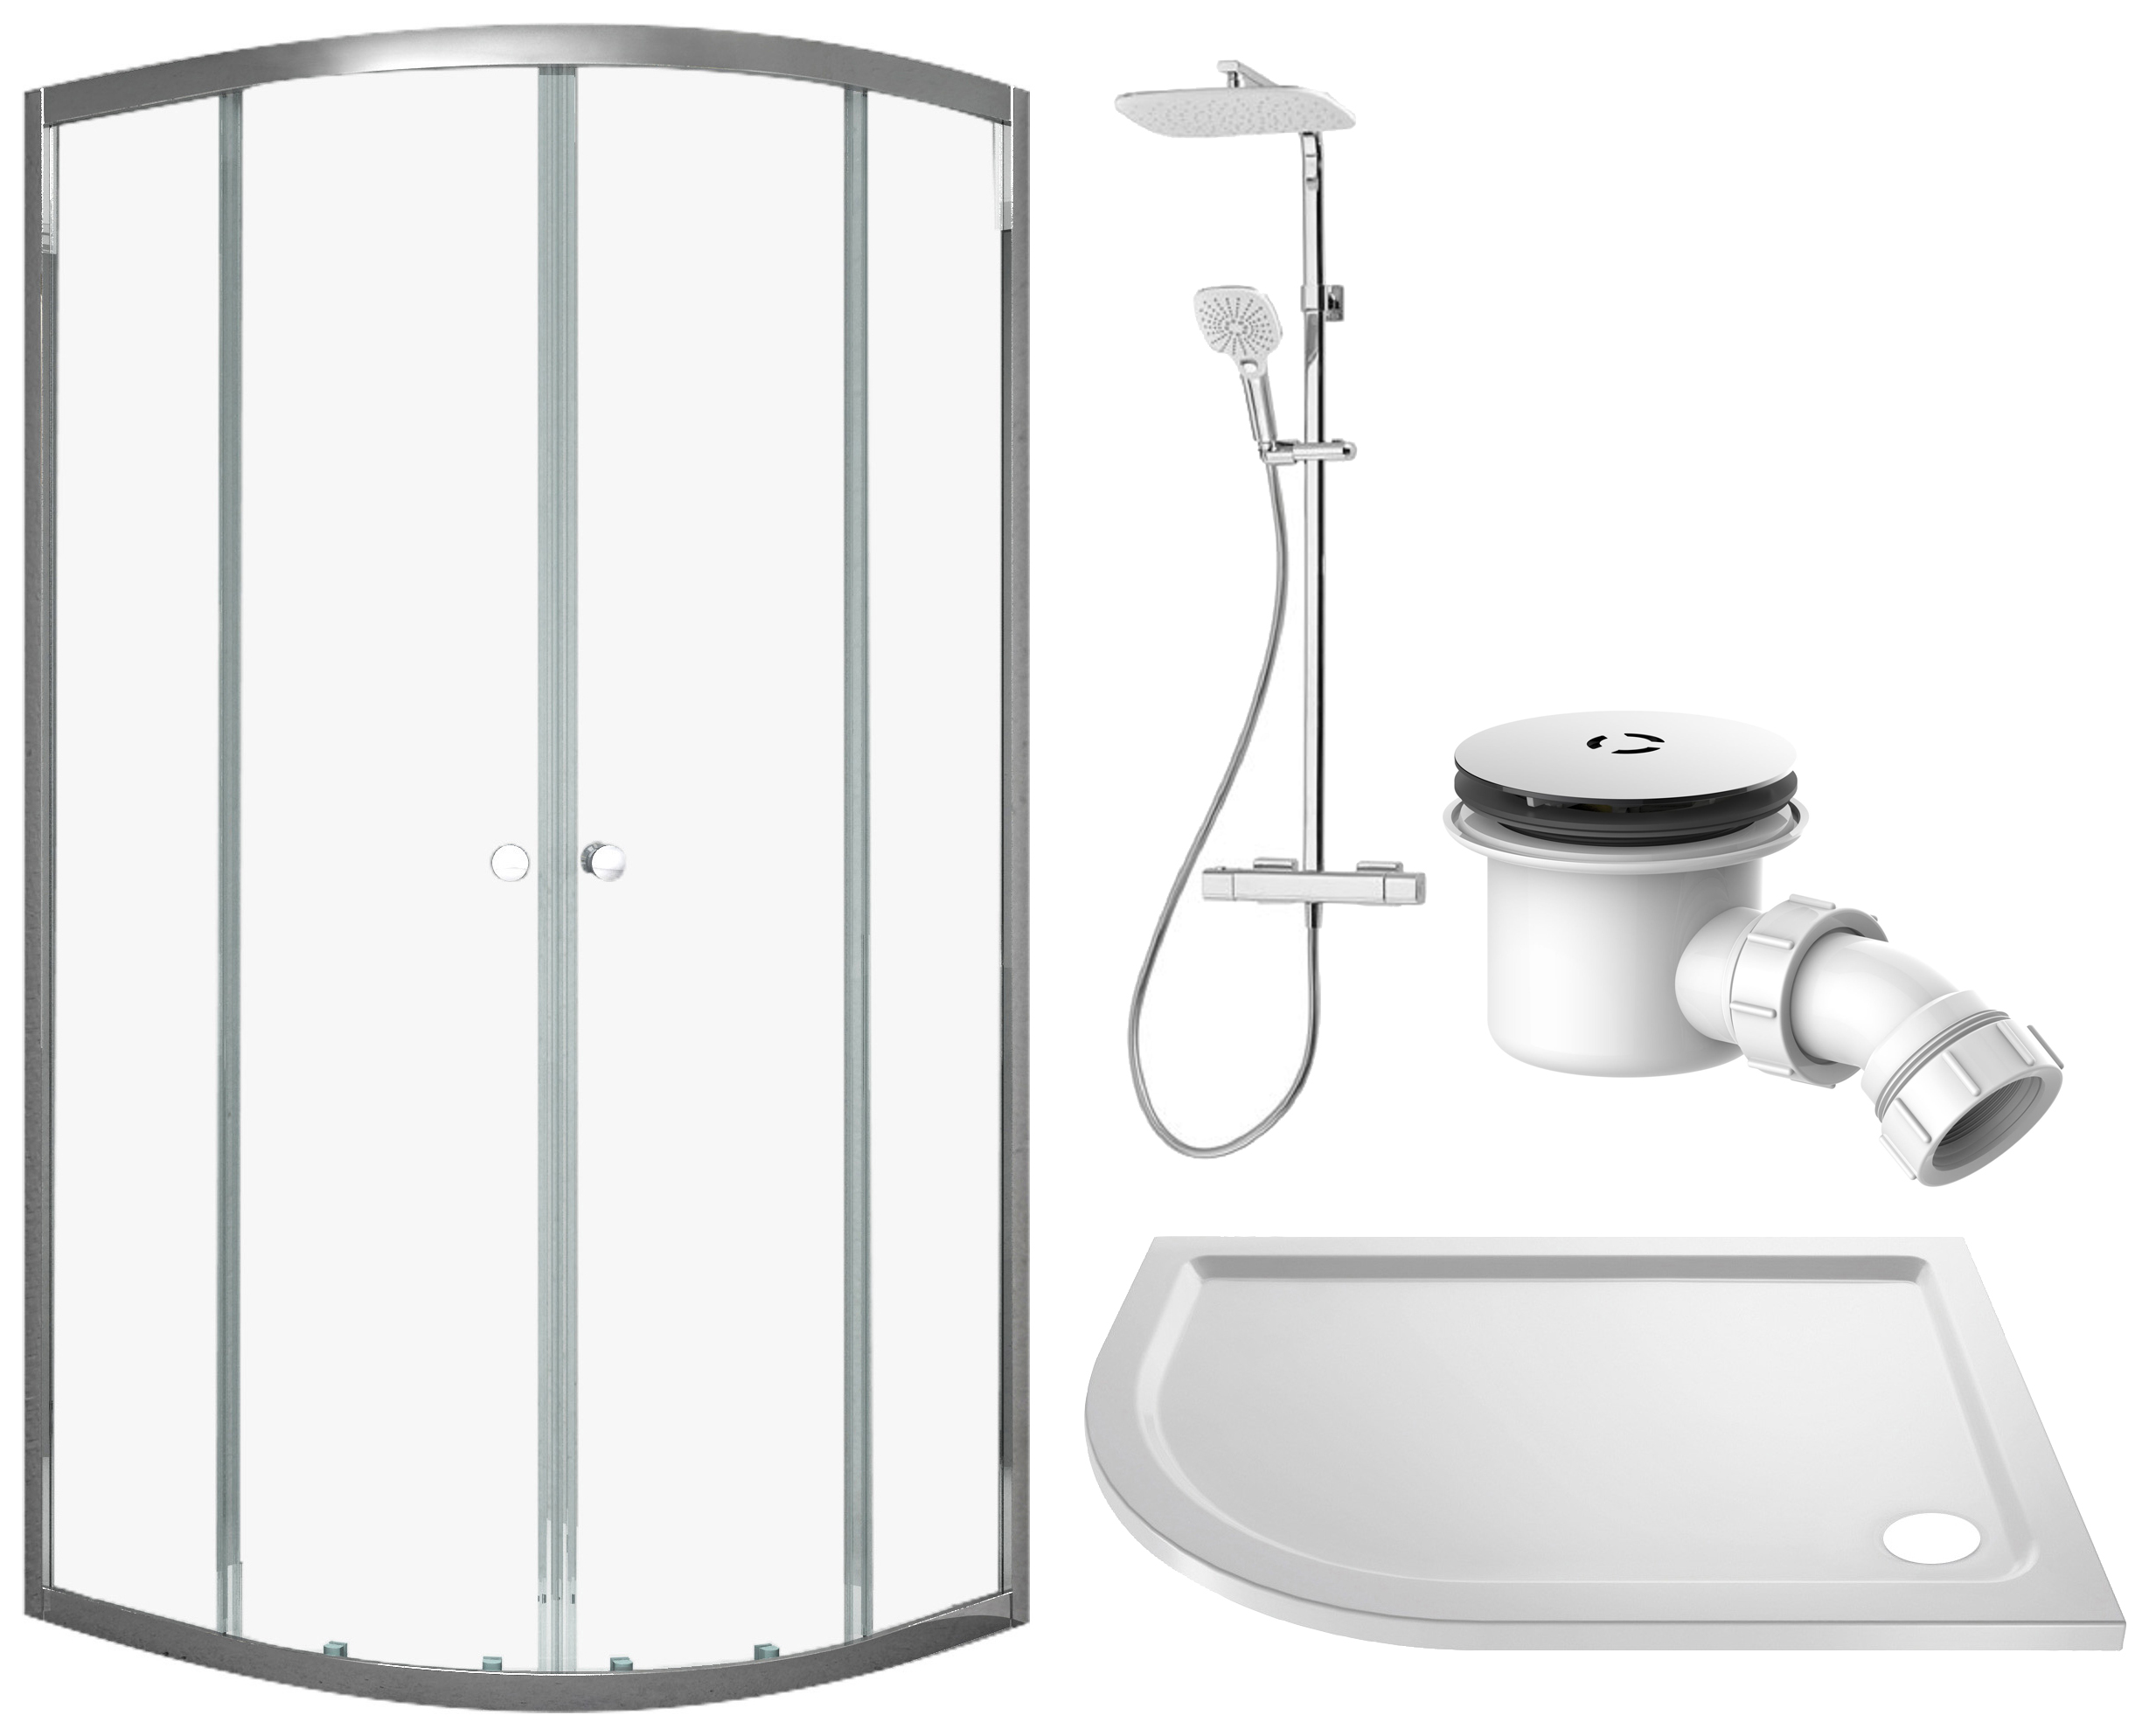 Vision 6mm Chrome Framed Left Hand Offset Quadrant Shower Enclosure with Triton Velino Mixer Shower, Shower Tray & Shower Waste